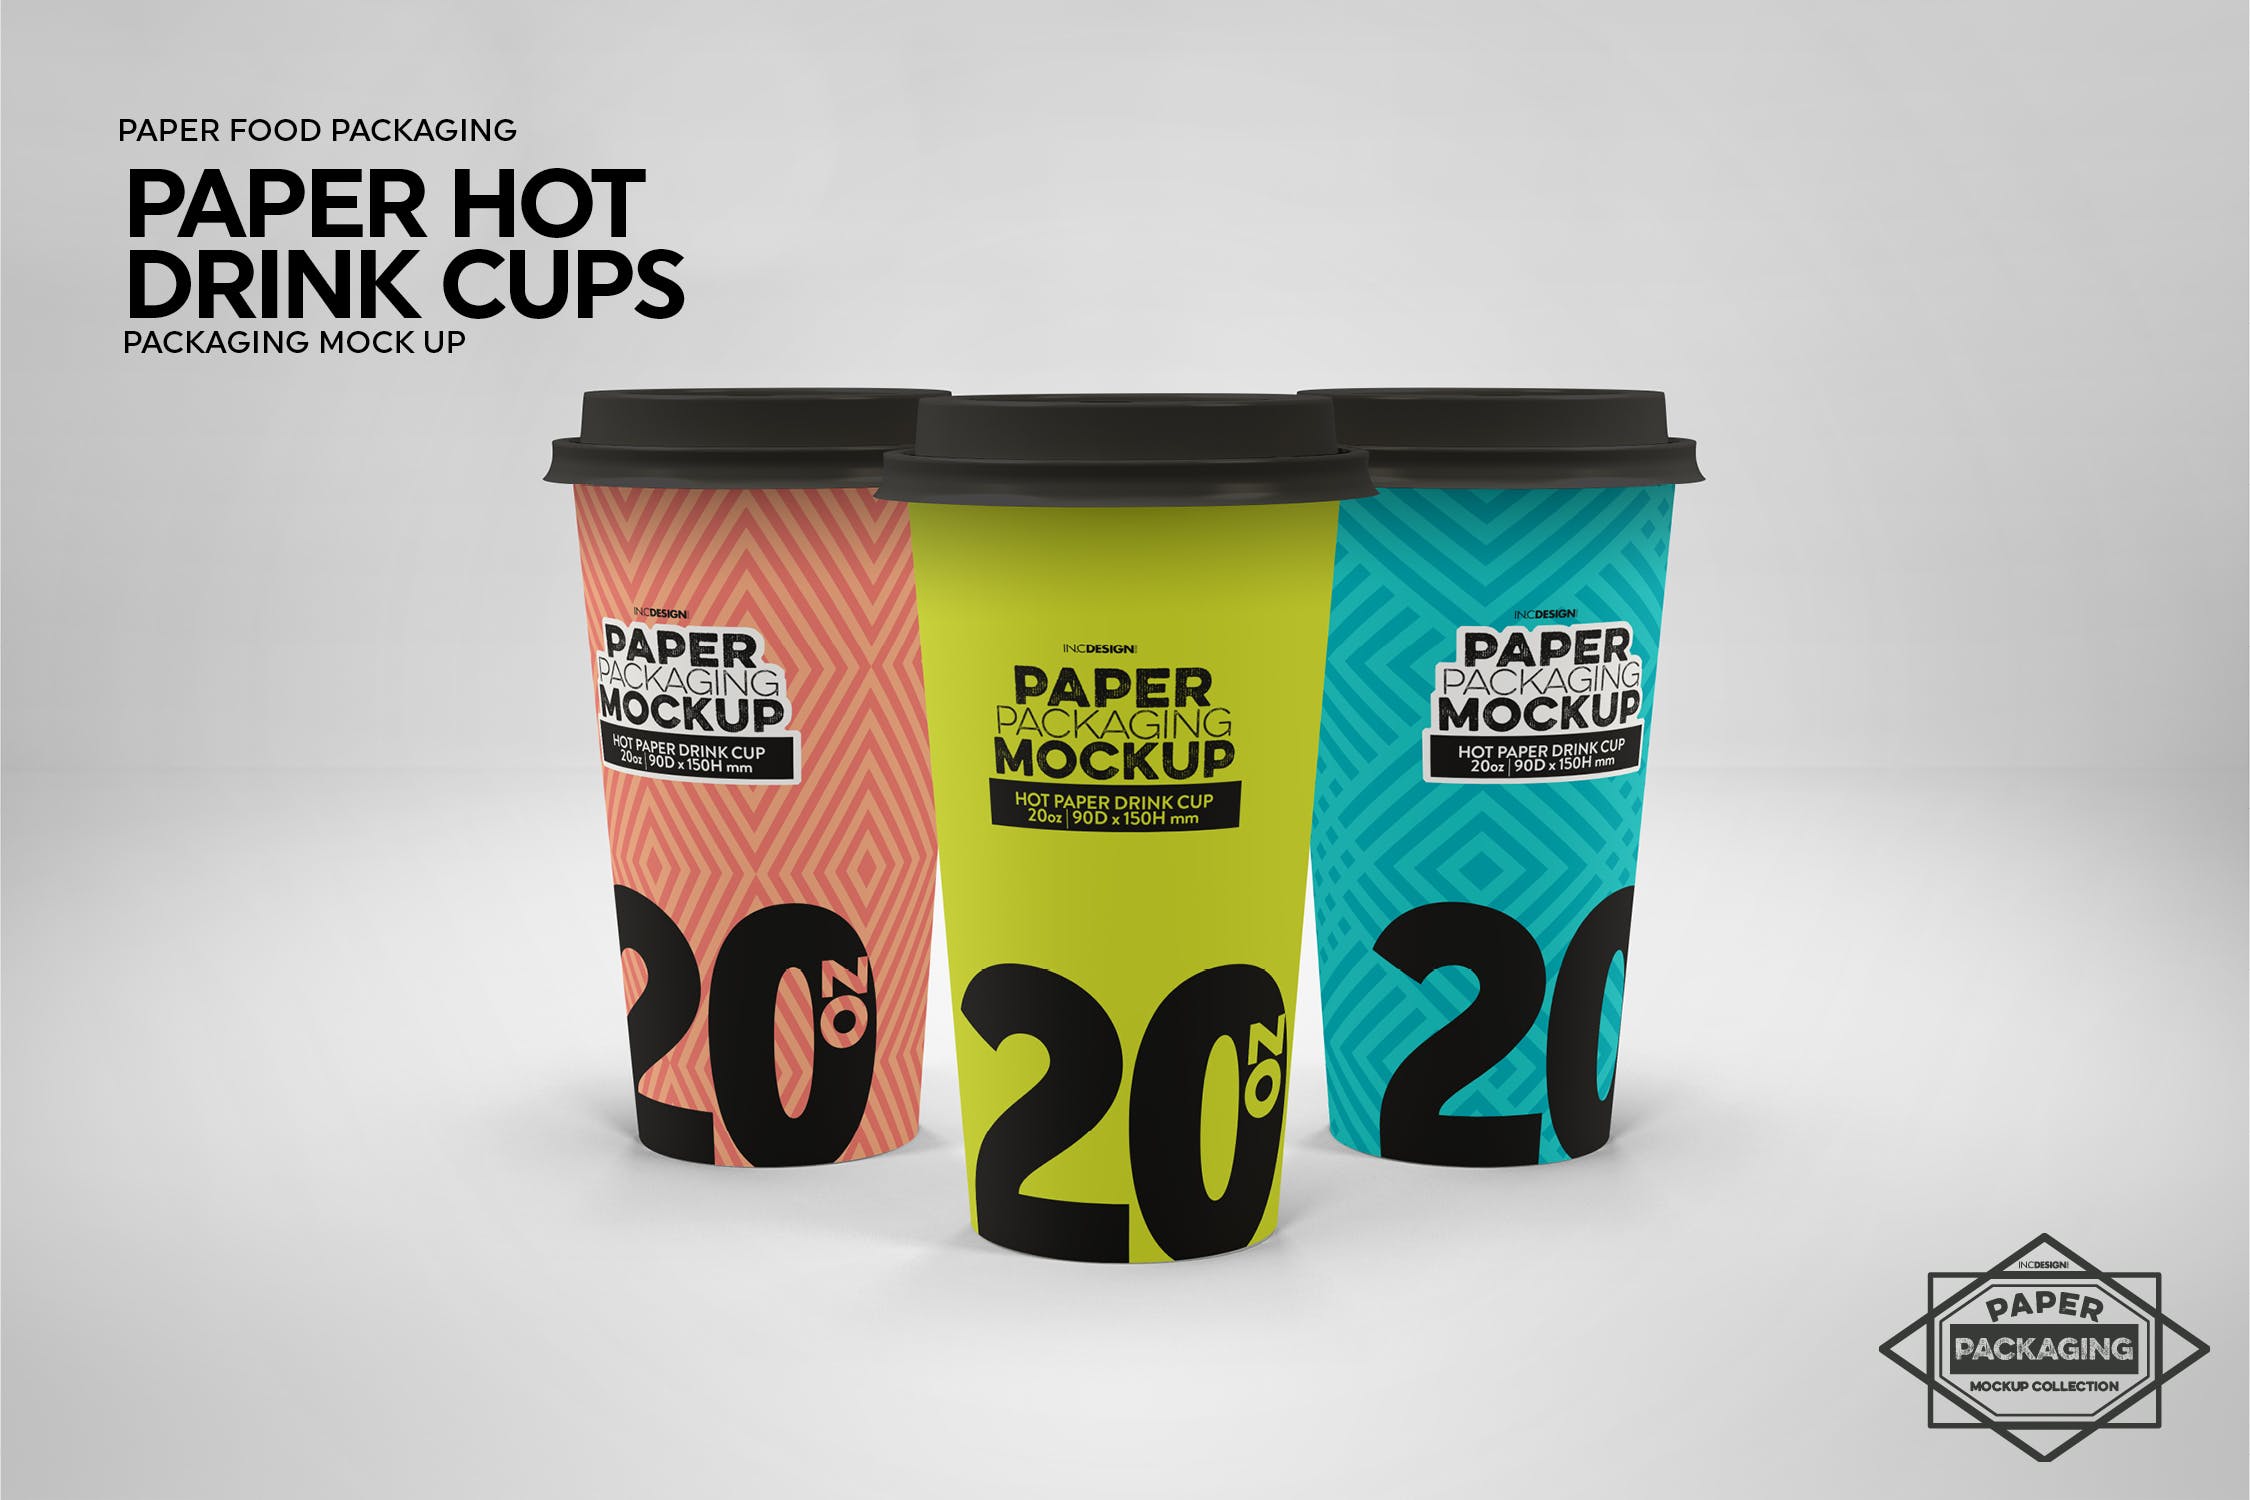 热饮一次性纸杯外观设计16图库精选 Paper Hot Drink Cups Packaging Mockup插图(6)